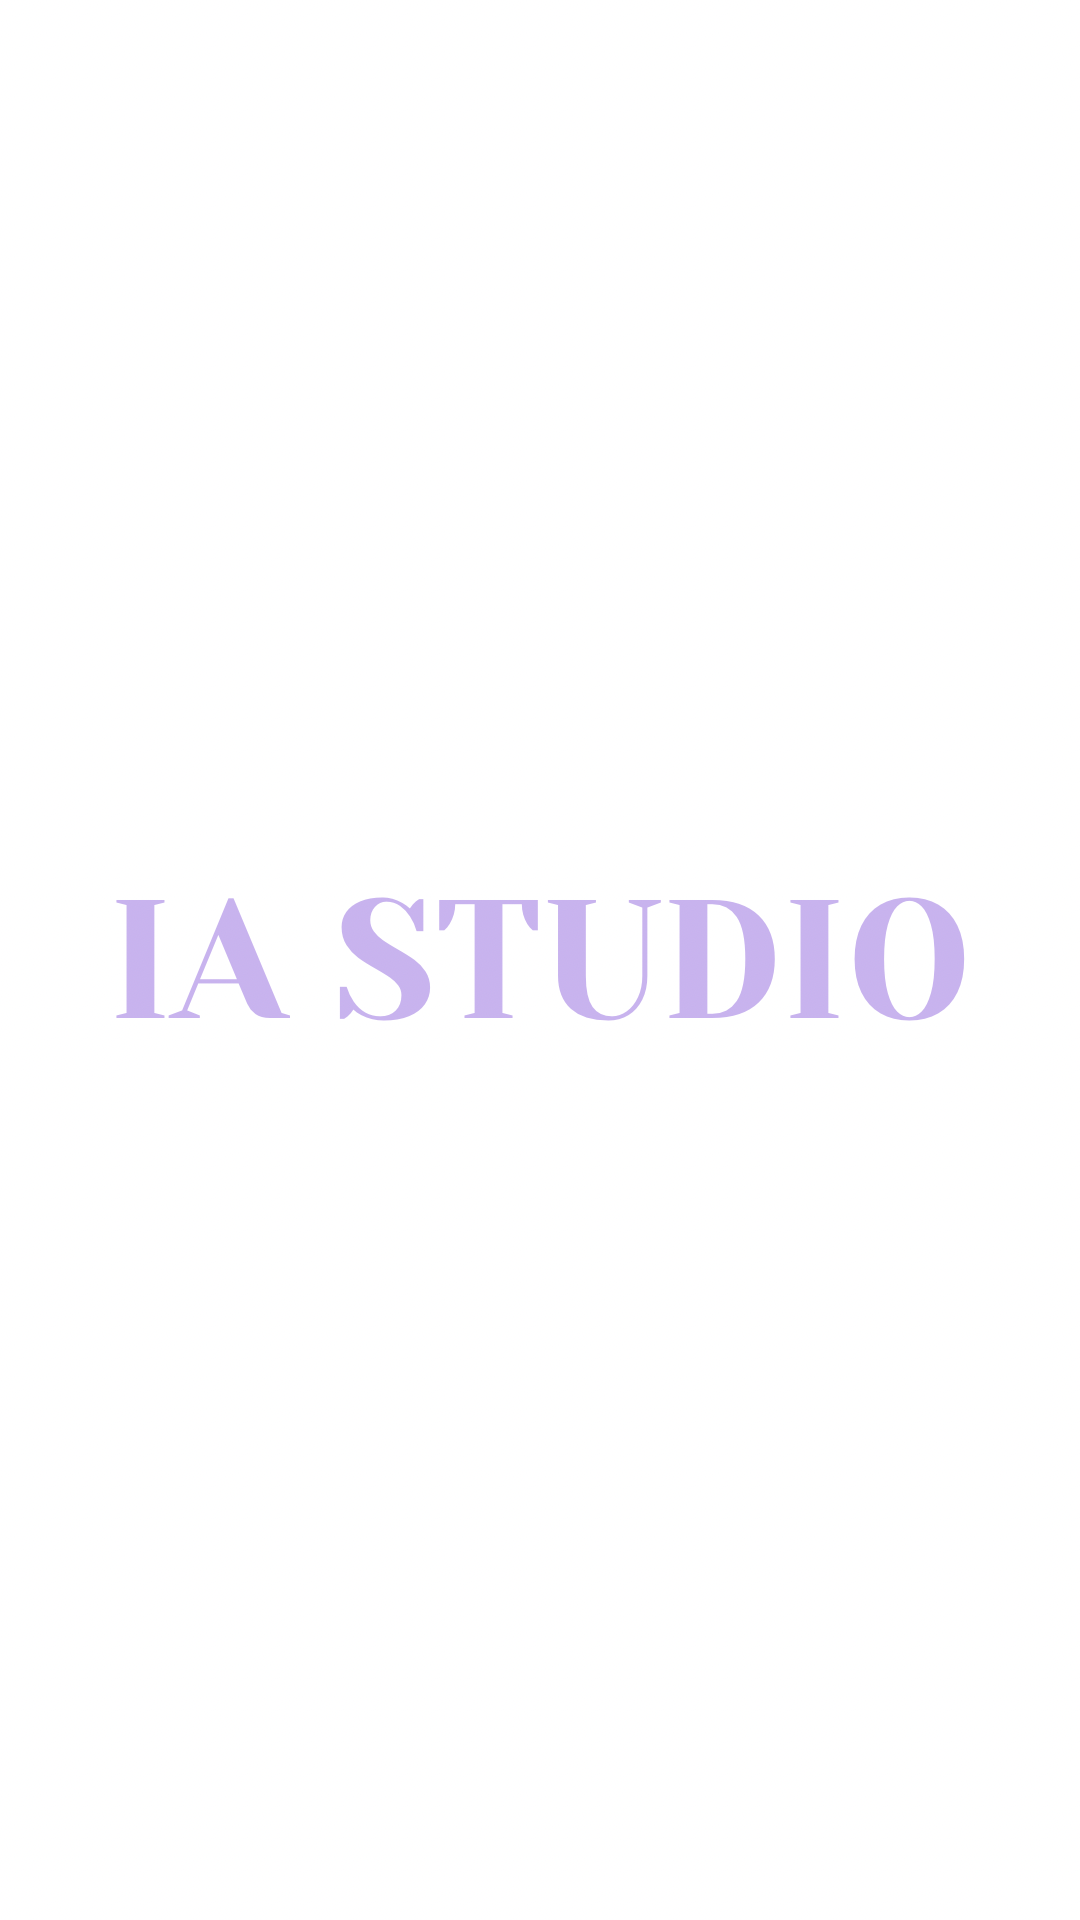 IA studio ApS